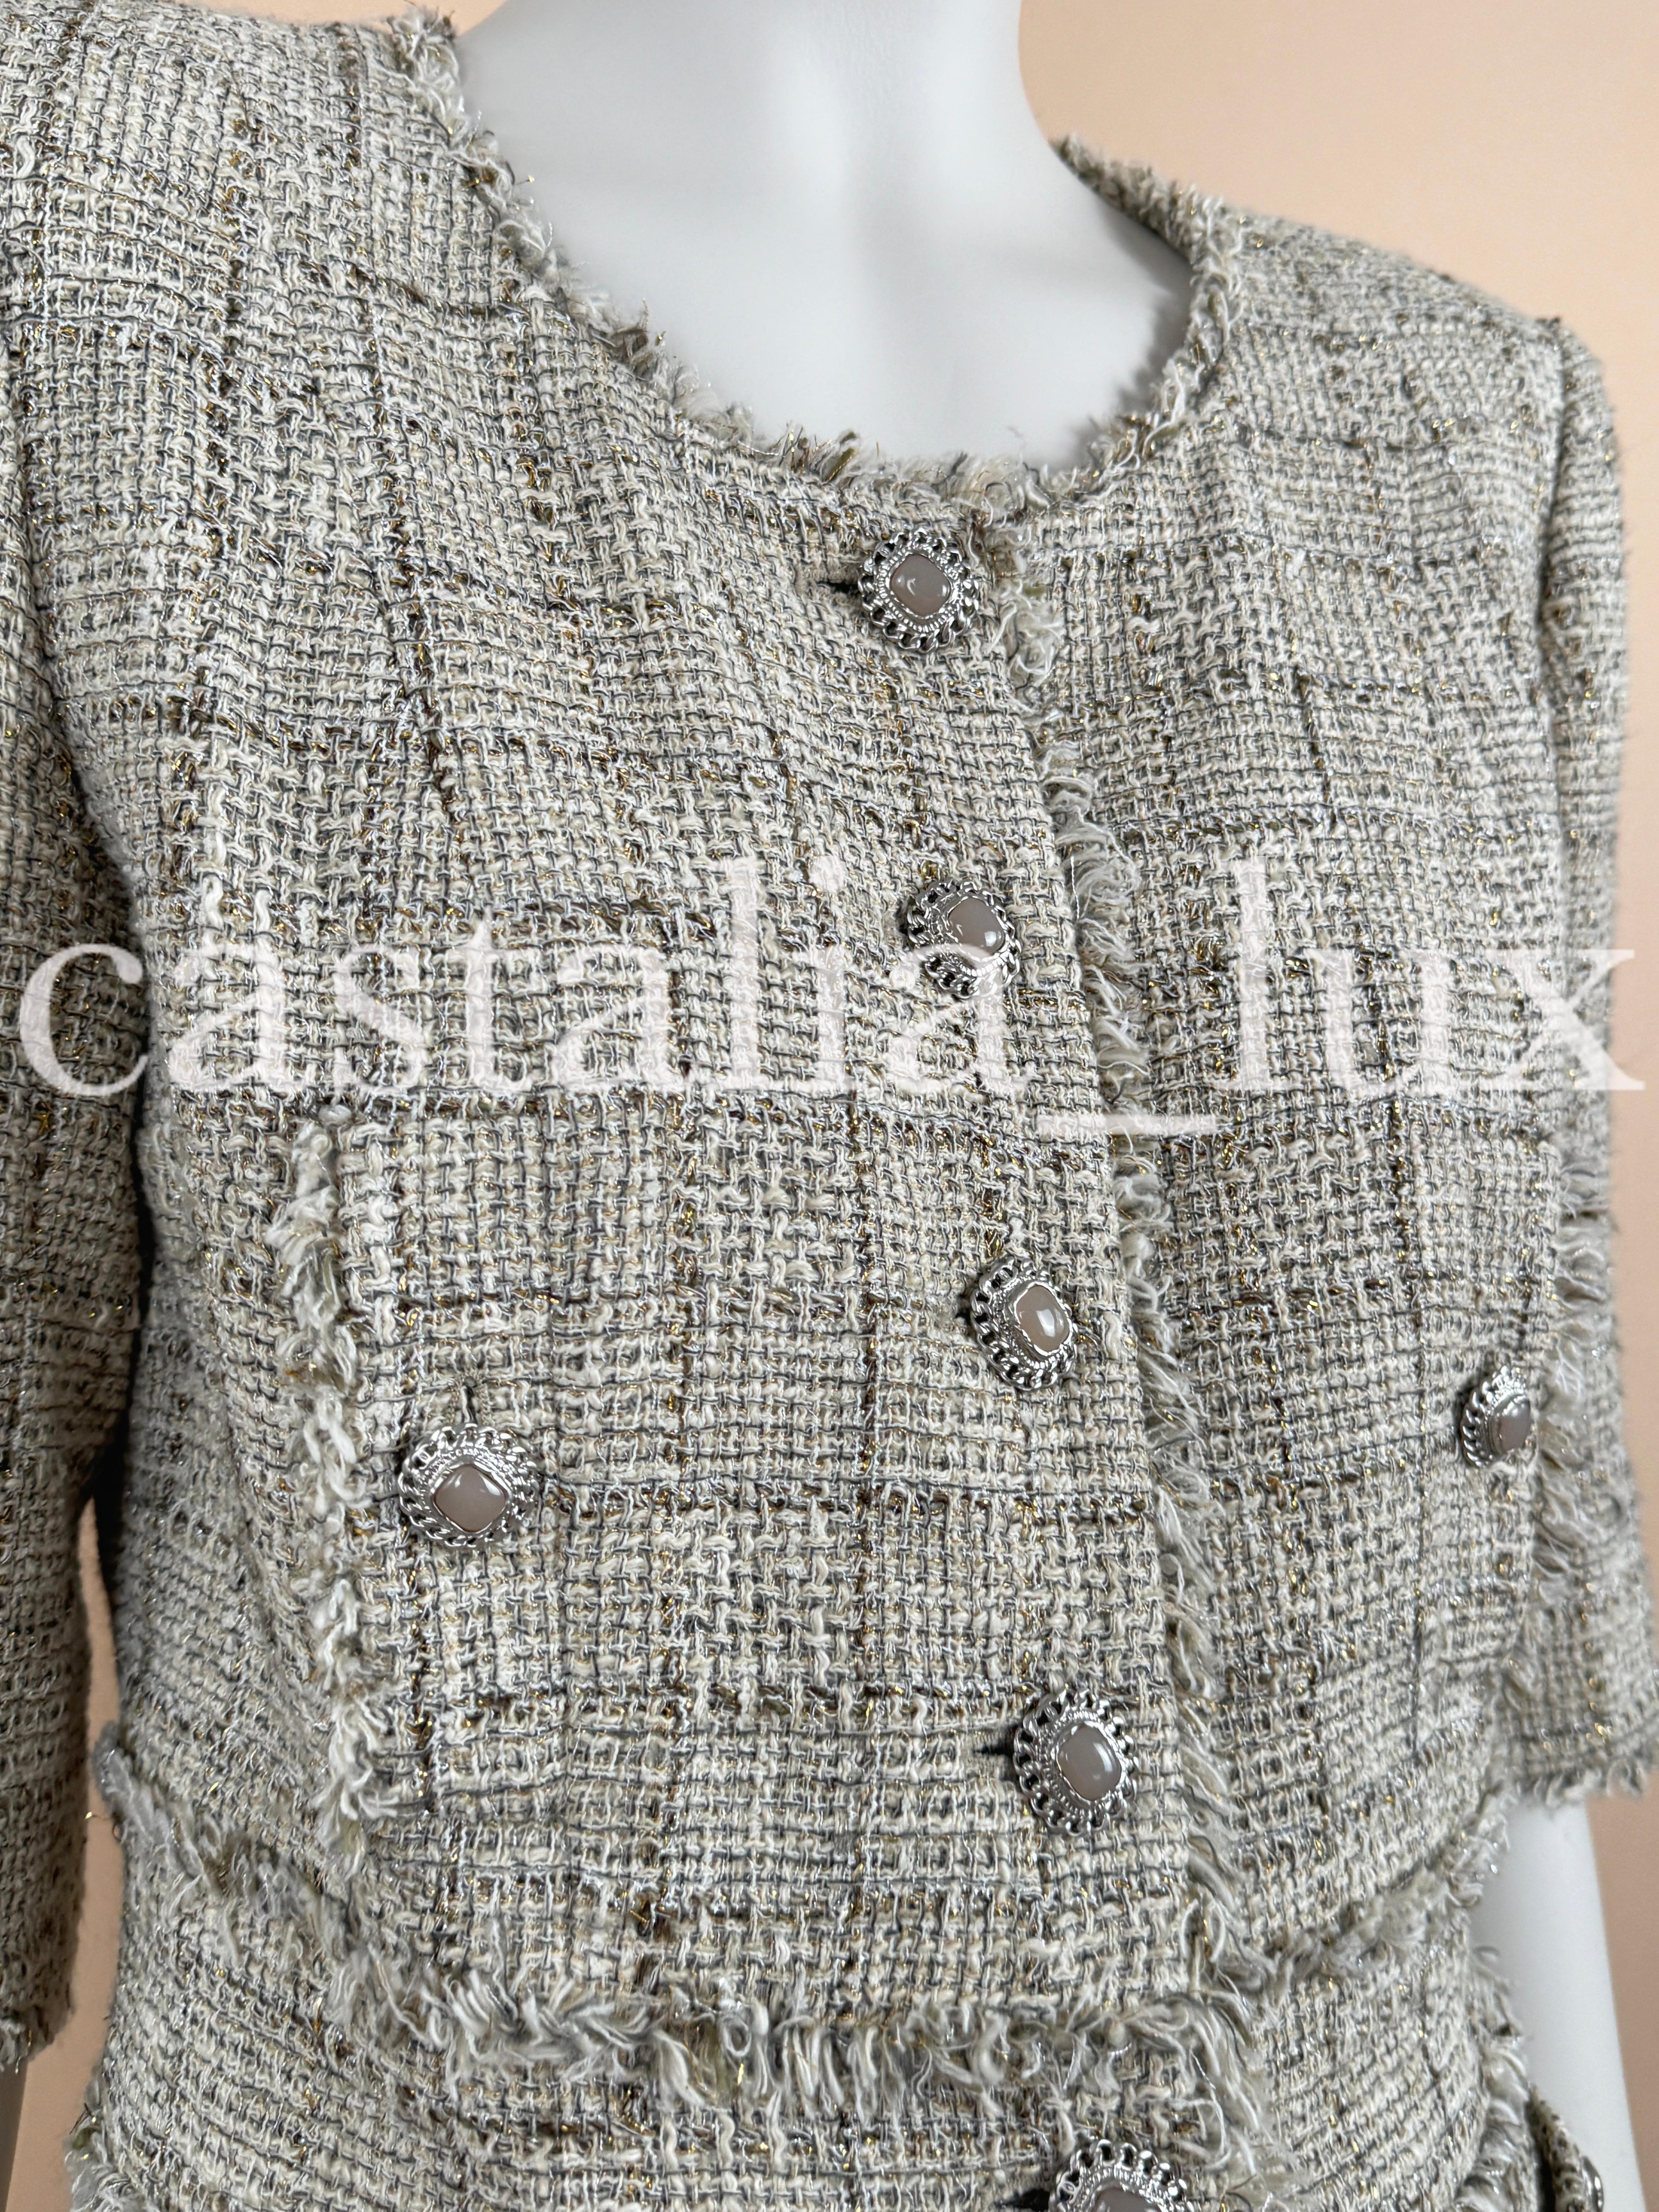 Chanel Gisele Bundchen Style Jewel Buttons Tweed Suit For Sale 7